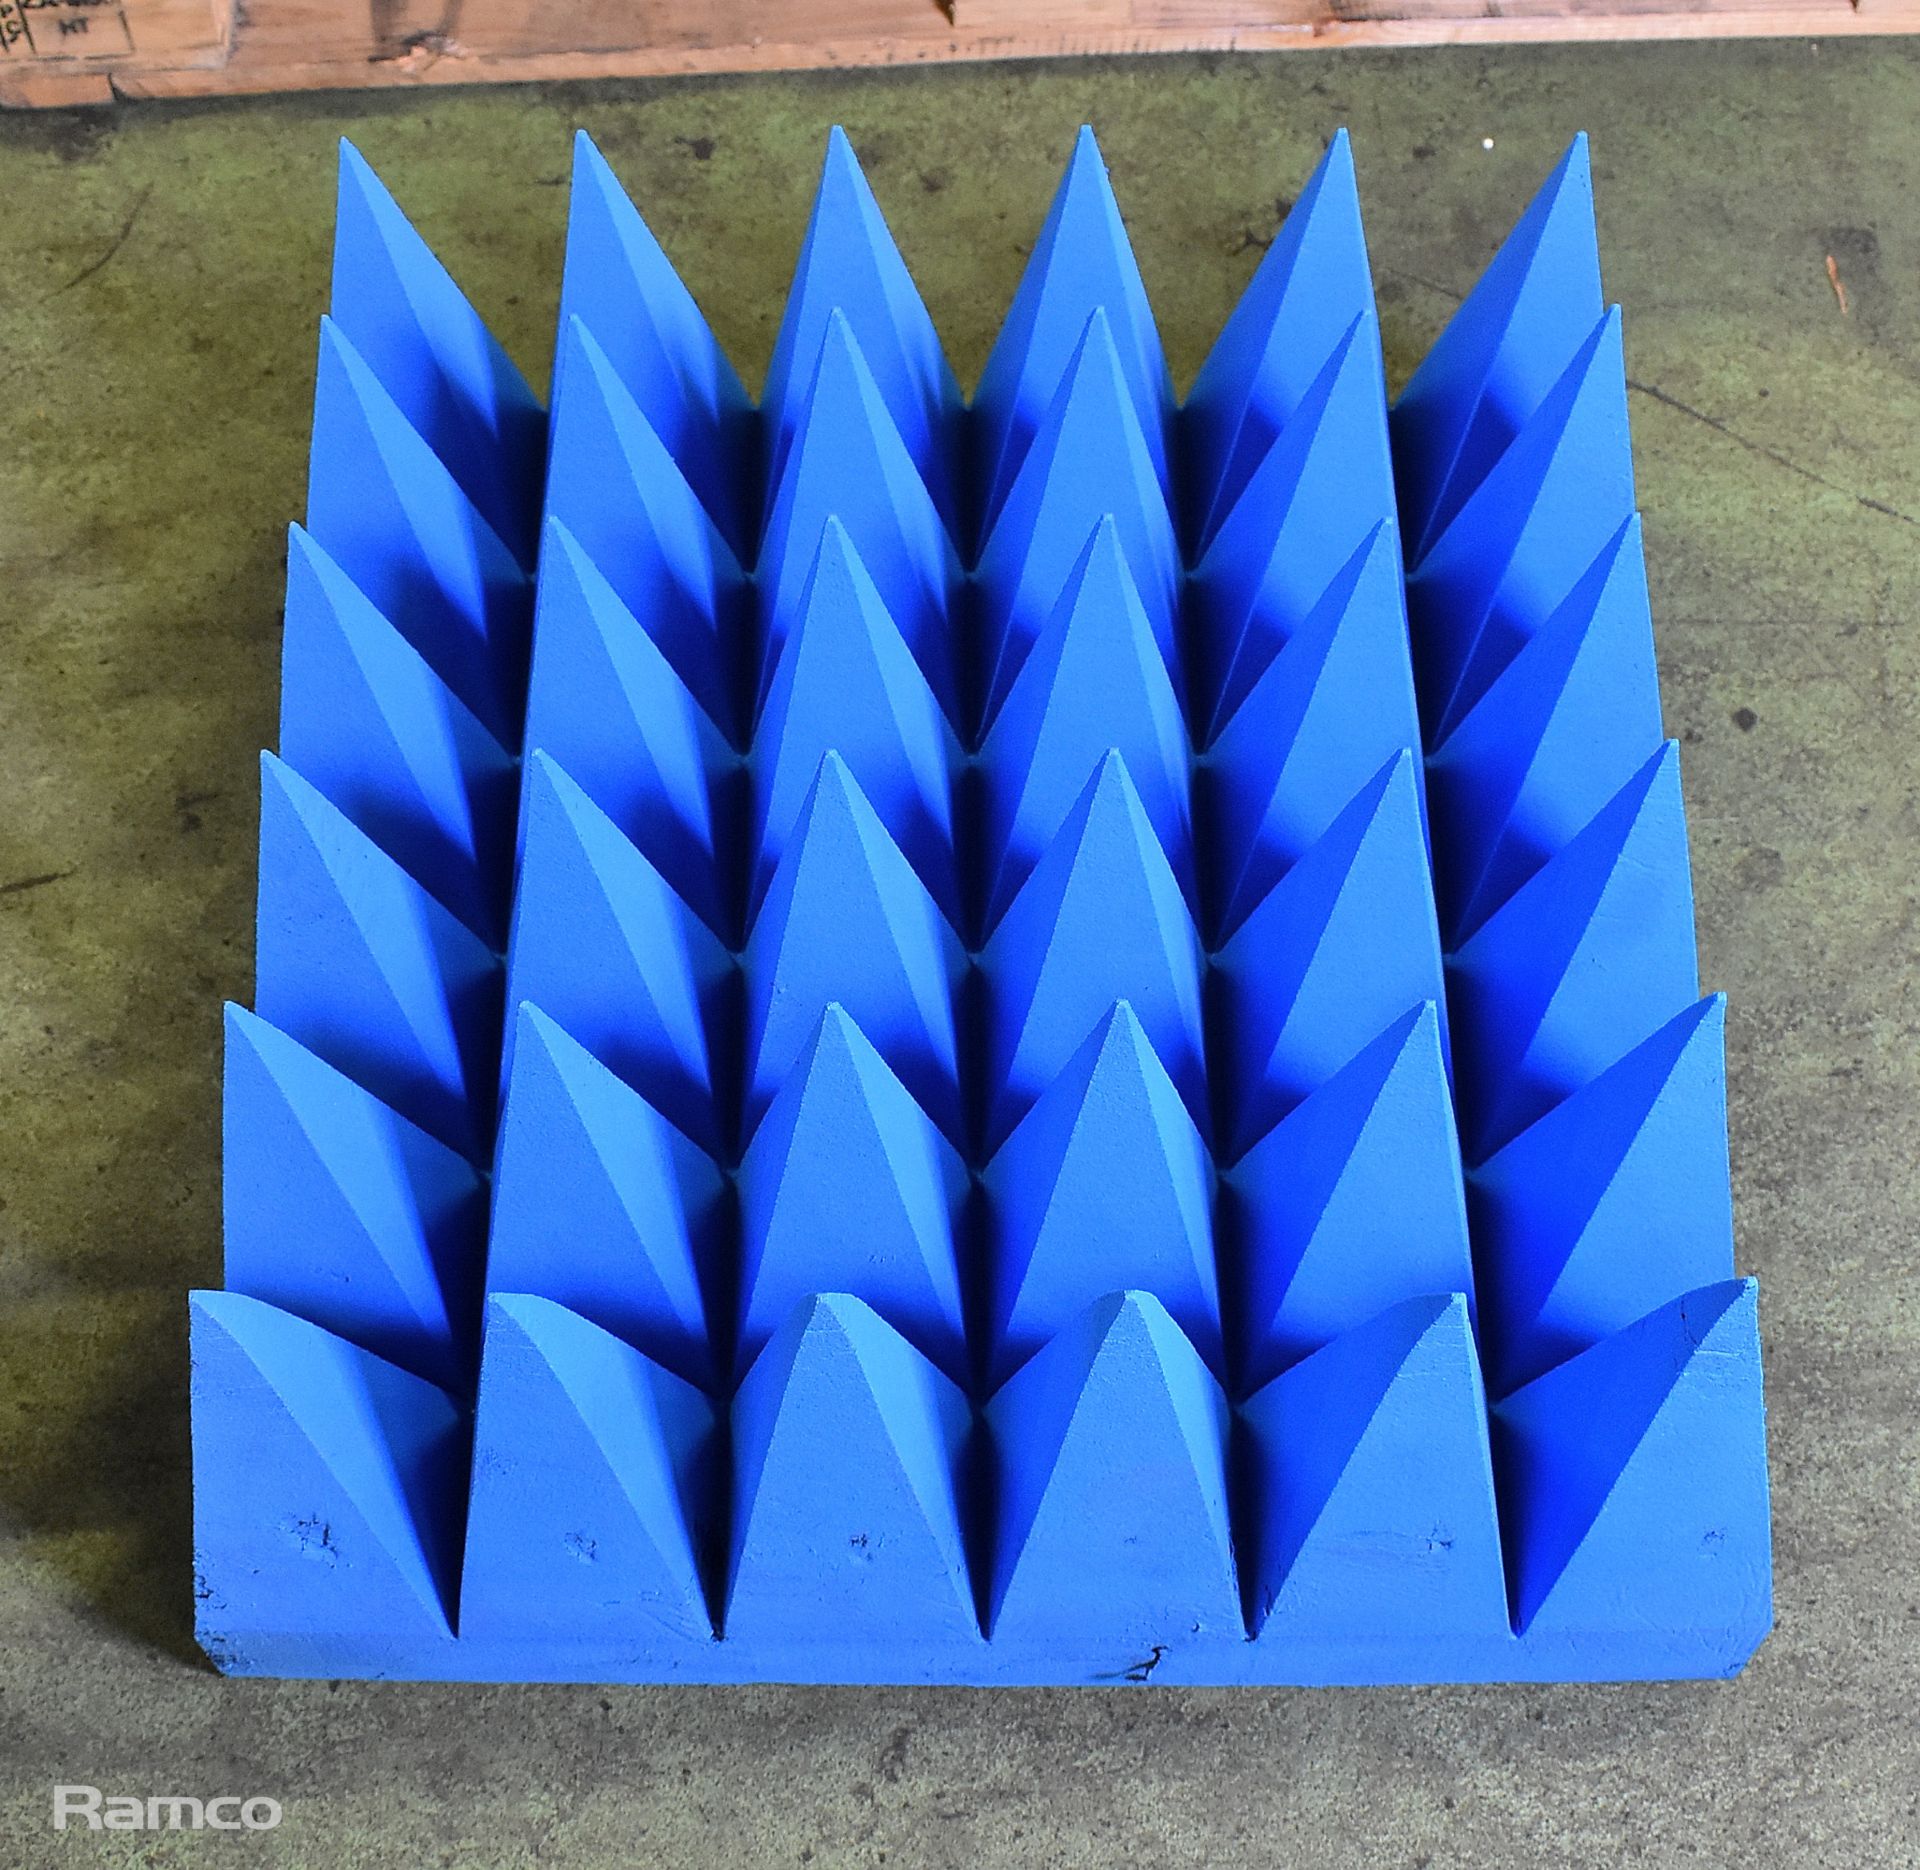 Anechoic Sound reducing foam panels - triangular prism design - 4 boxes - 2 panels per box - Image 2 of 4